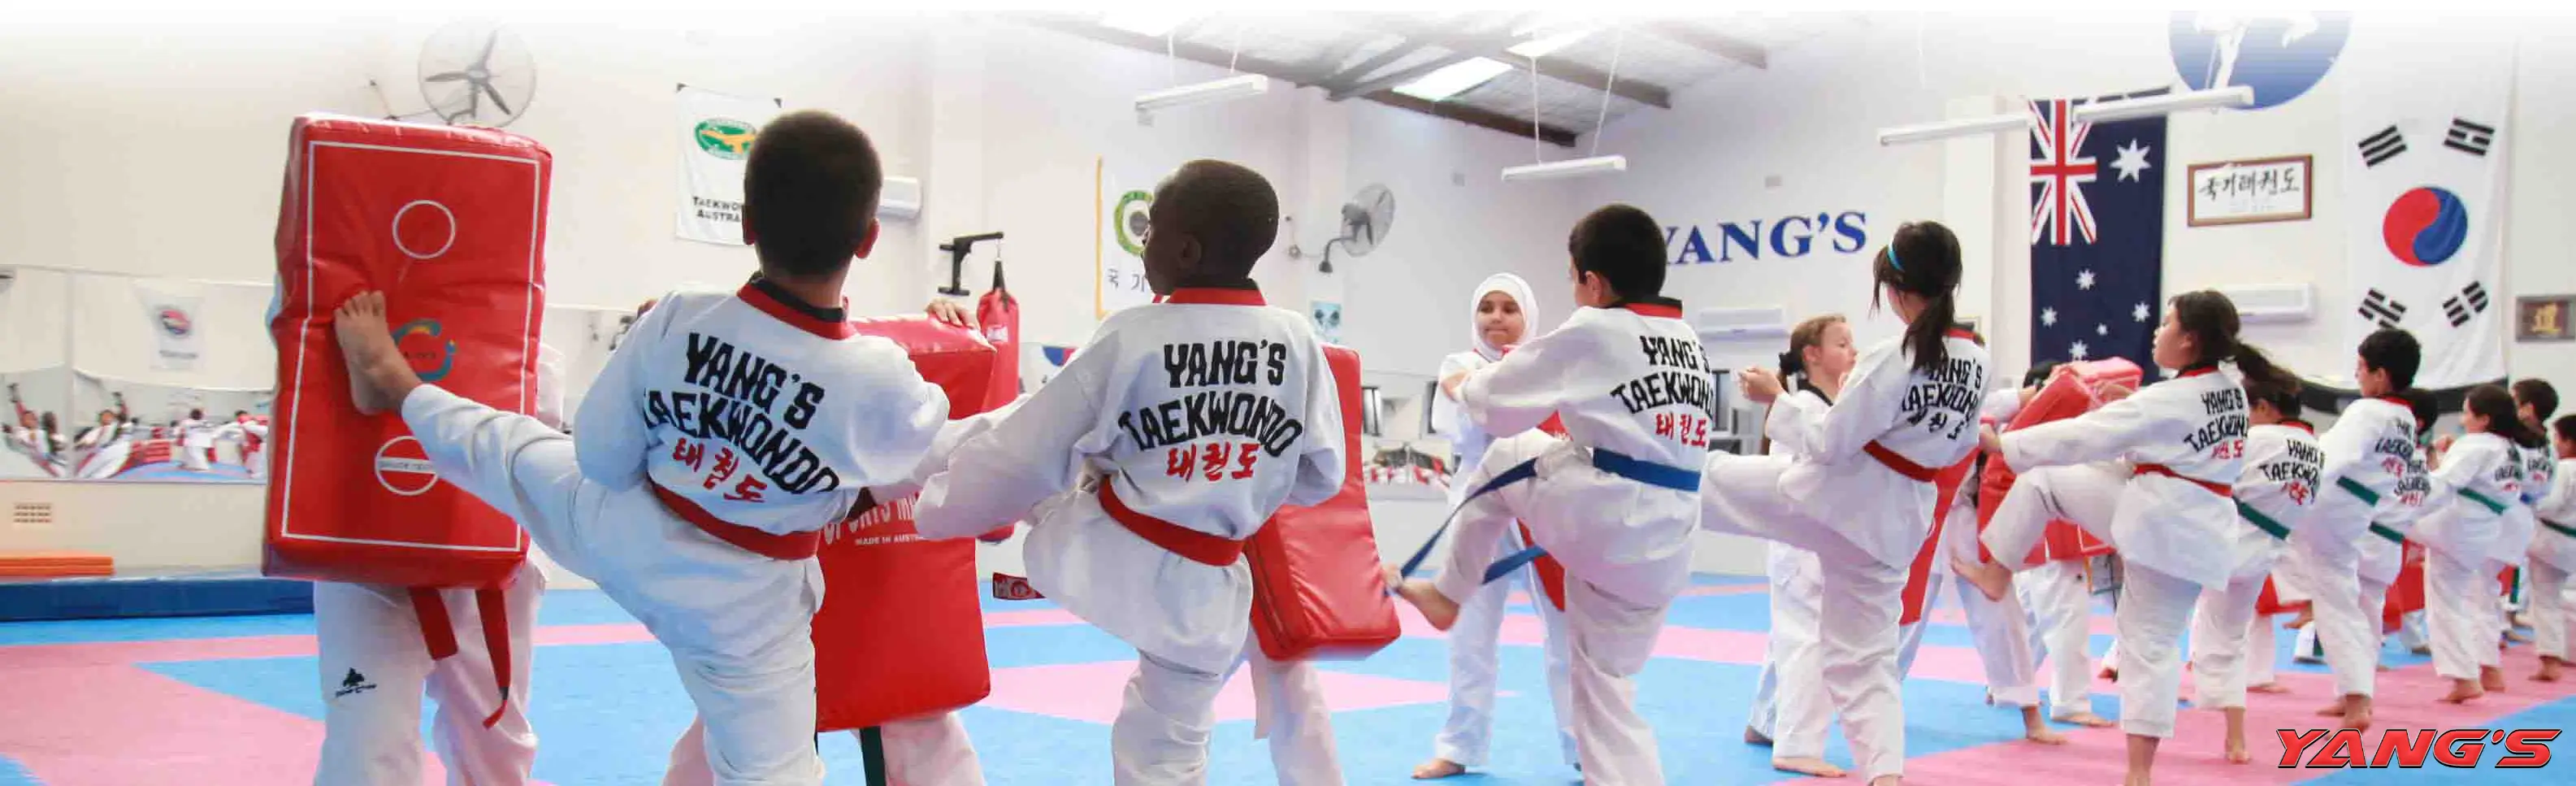 Yang's Taekwondo Academy